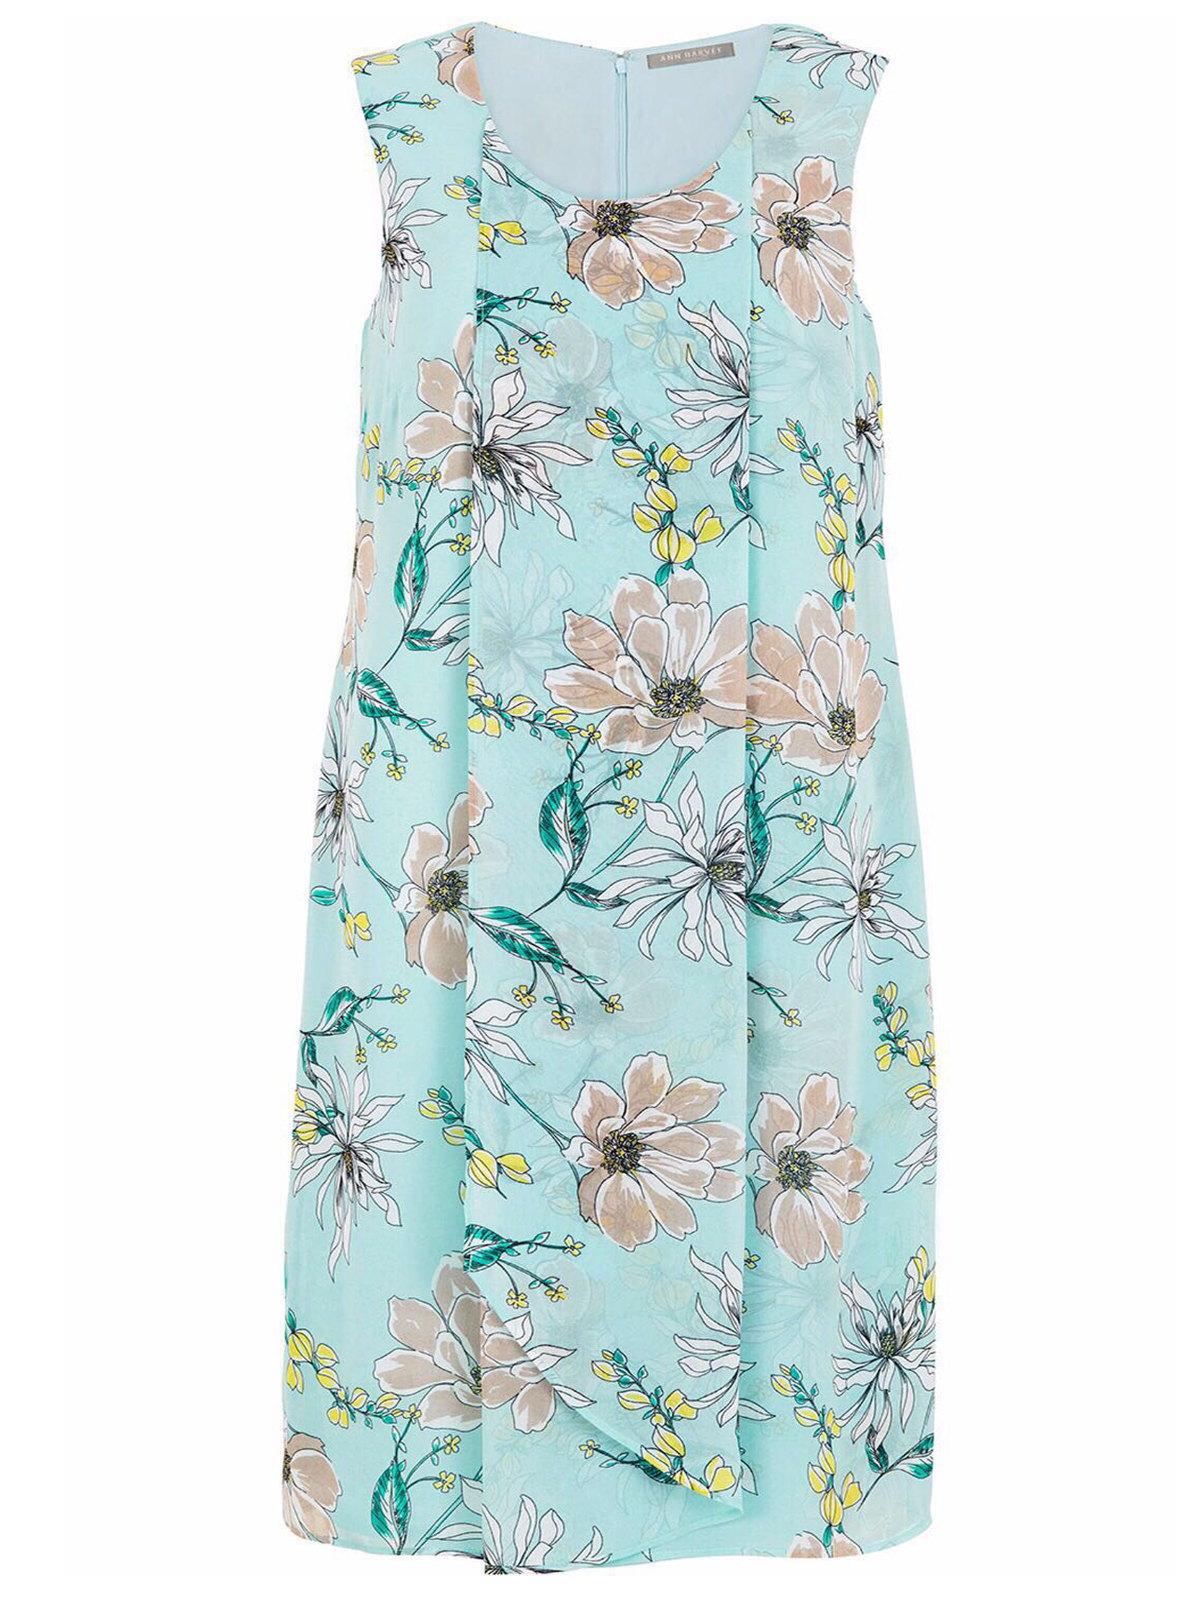 Ann Harv3y MINT Floral Sleeveless Botanical Blooms Dress - Plus Size 14 ...